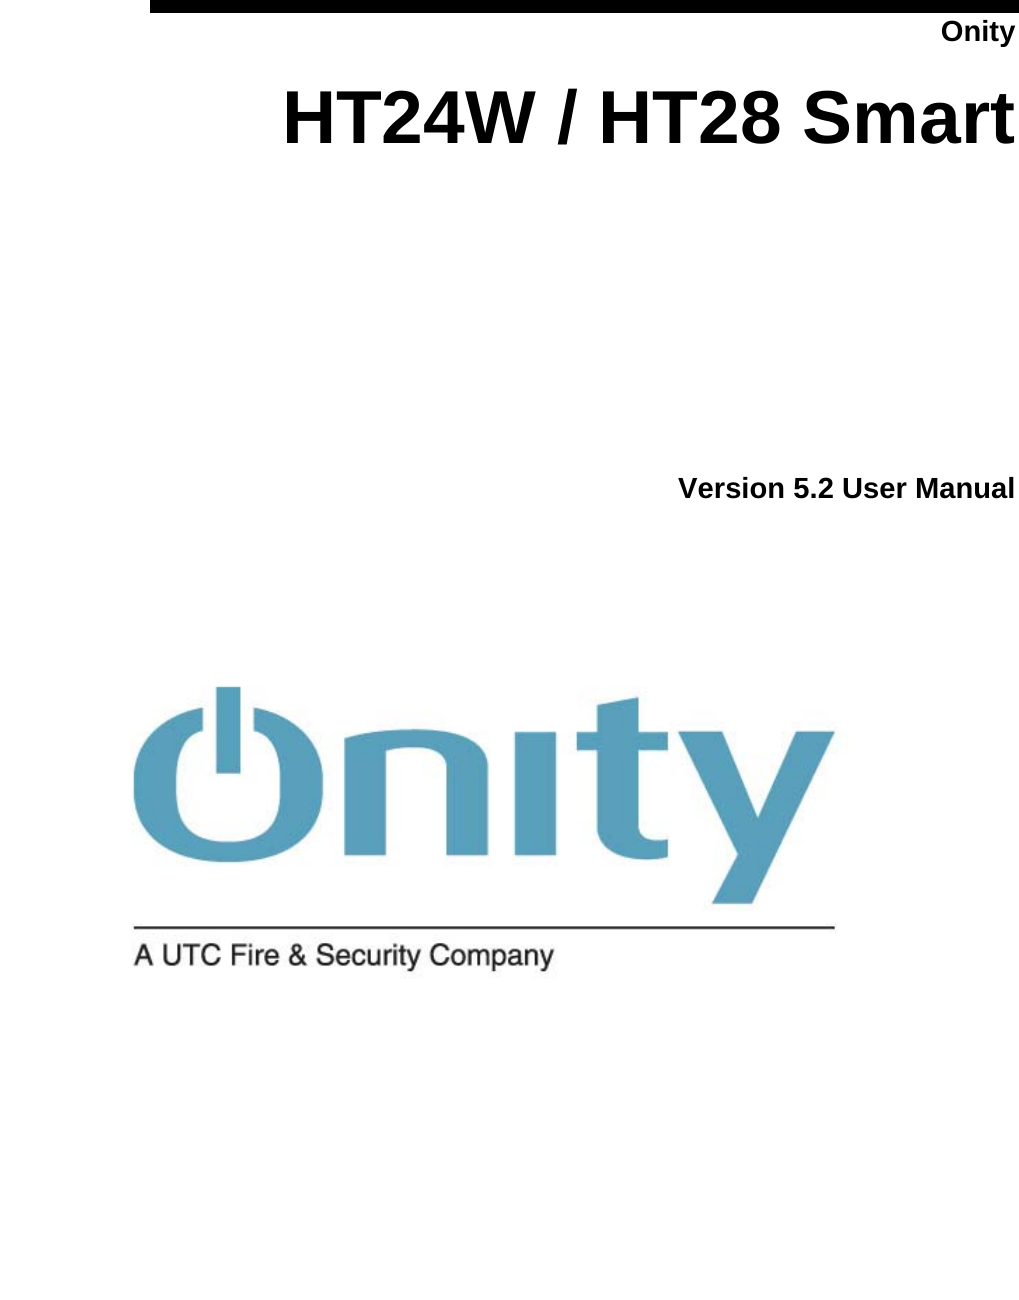   Onity HT24W / HT28 Smart         Version 5.2 User Manual   